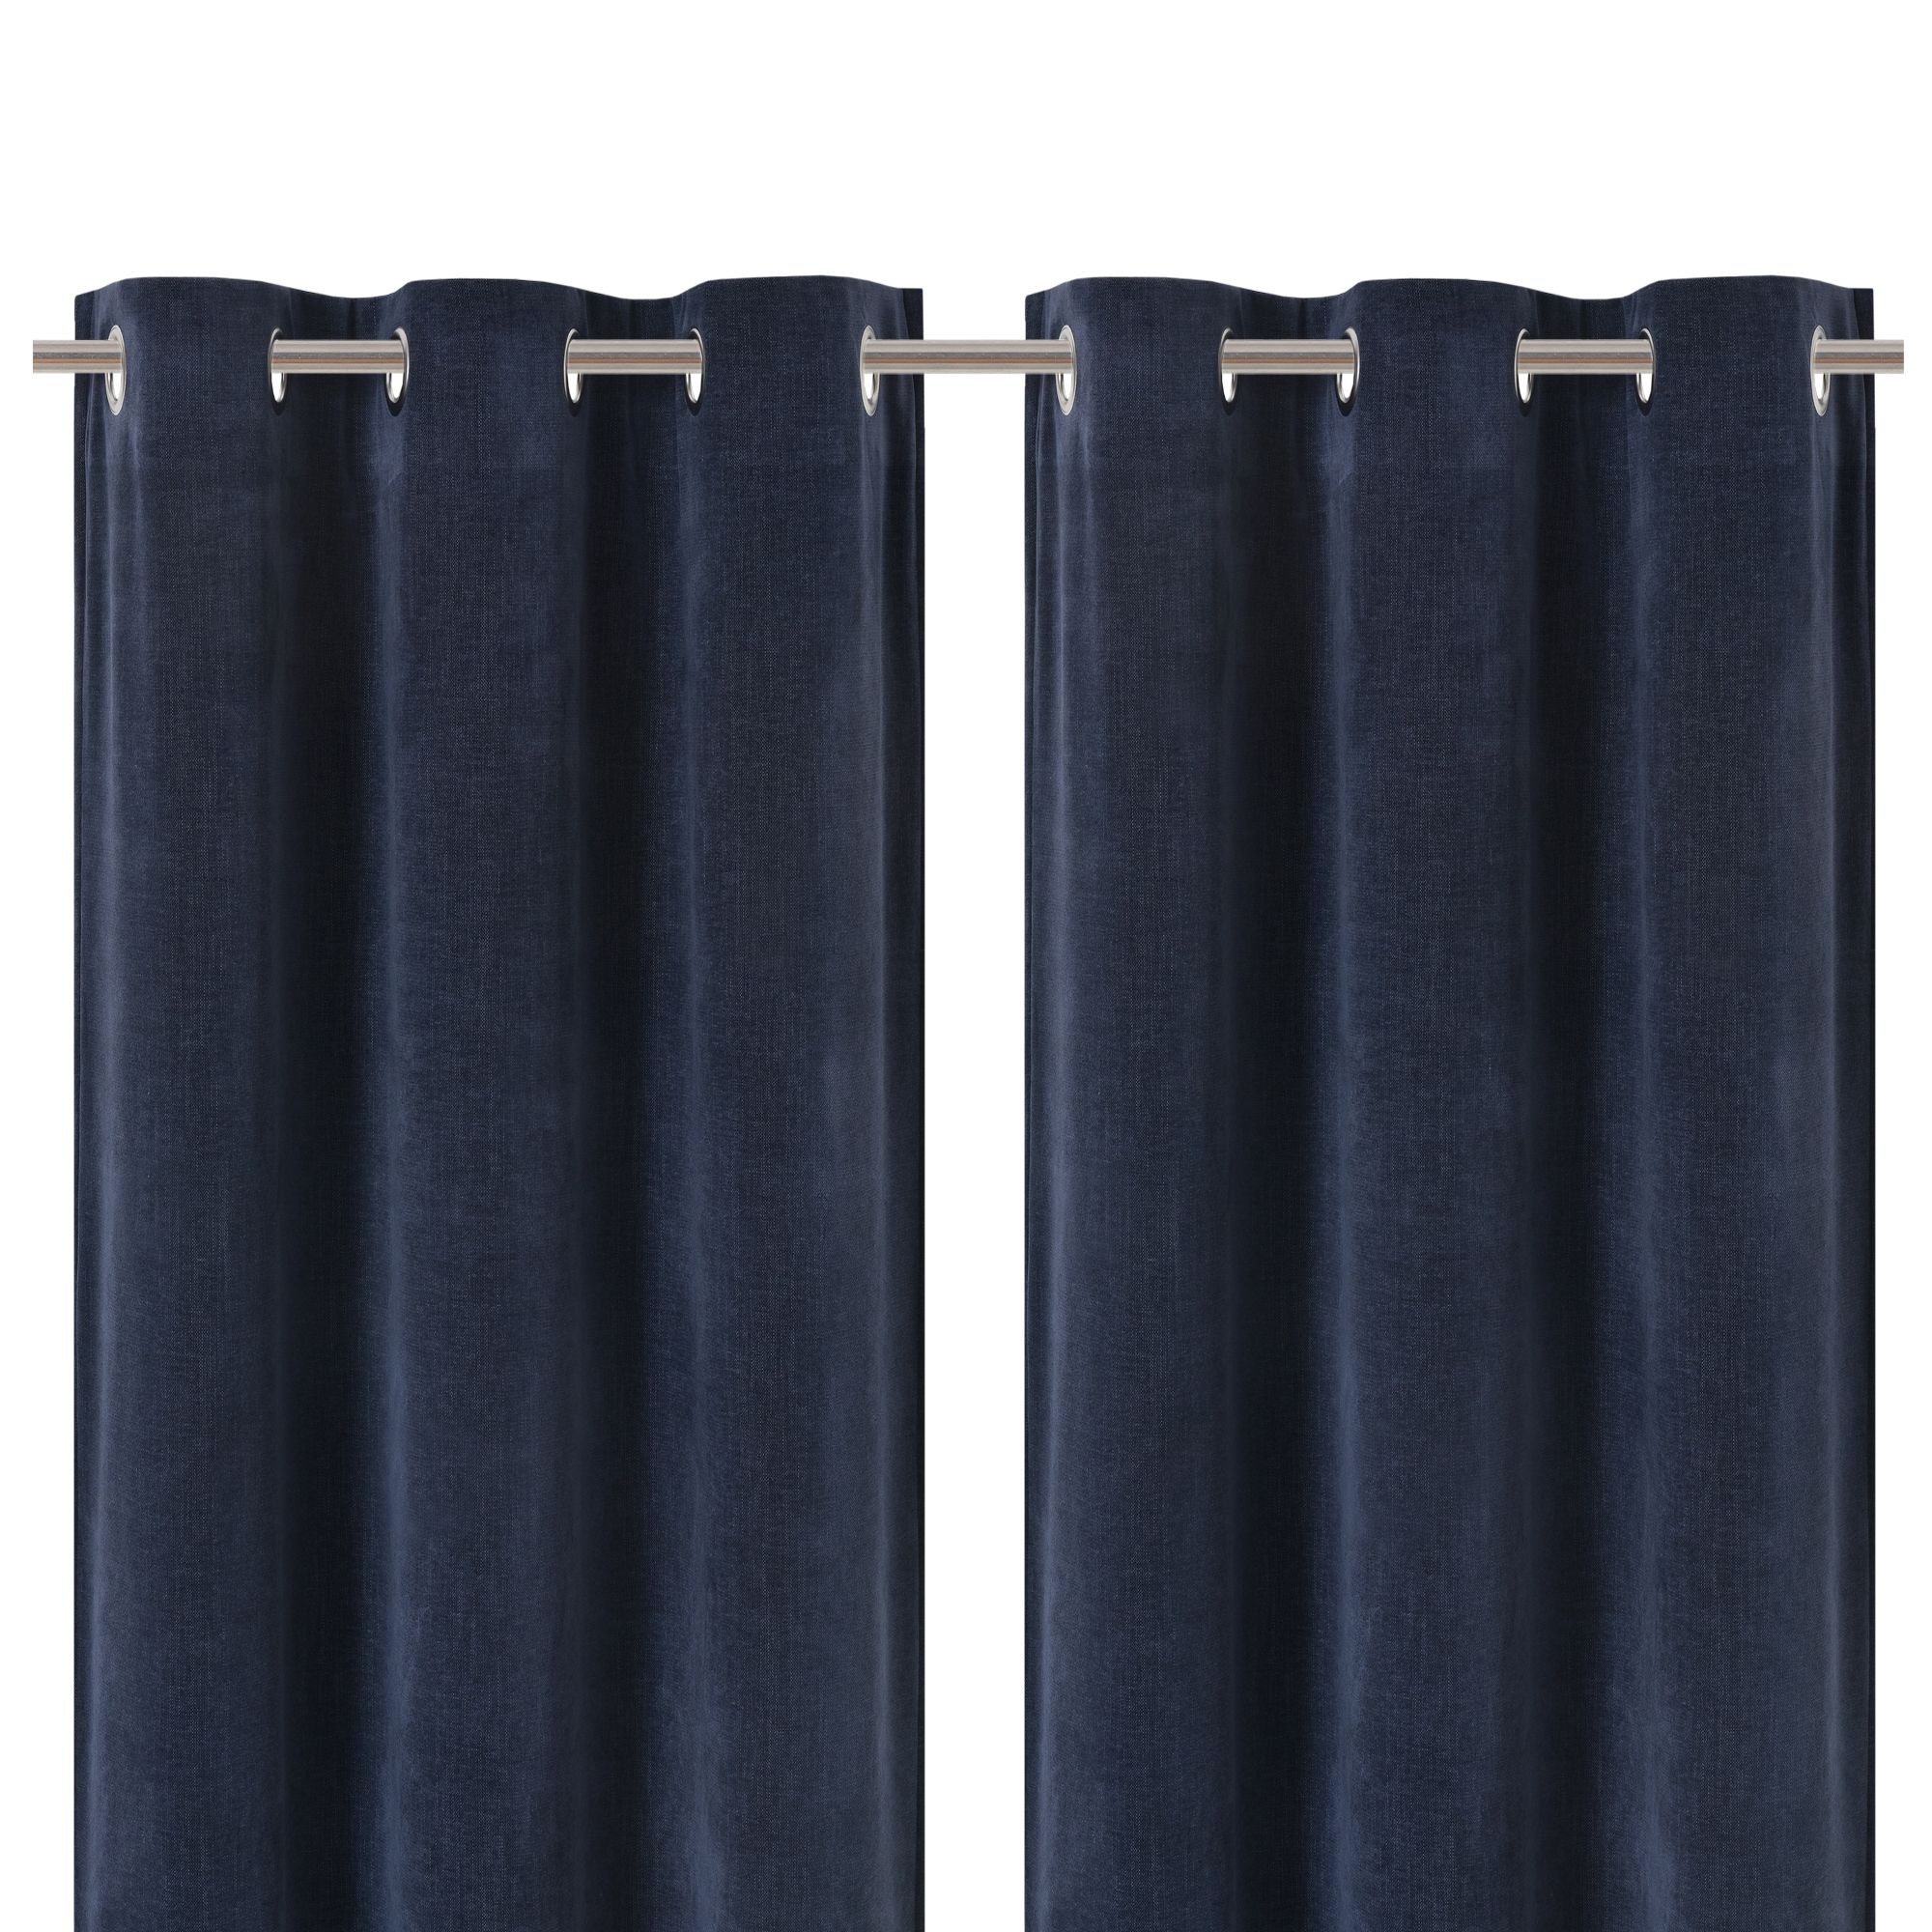 Arntzen Navy Plain woven Lined Eyelet Curtain (W)228cm (L)228cm, Pair